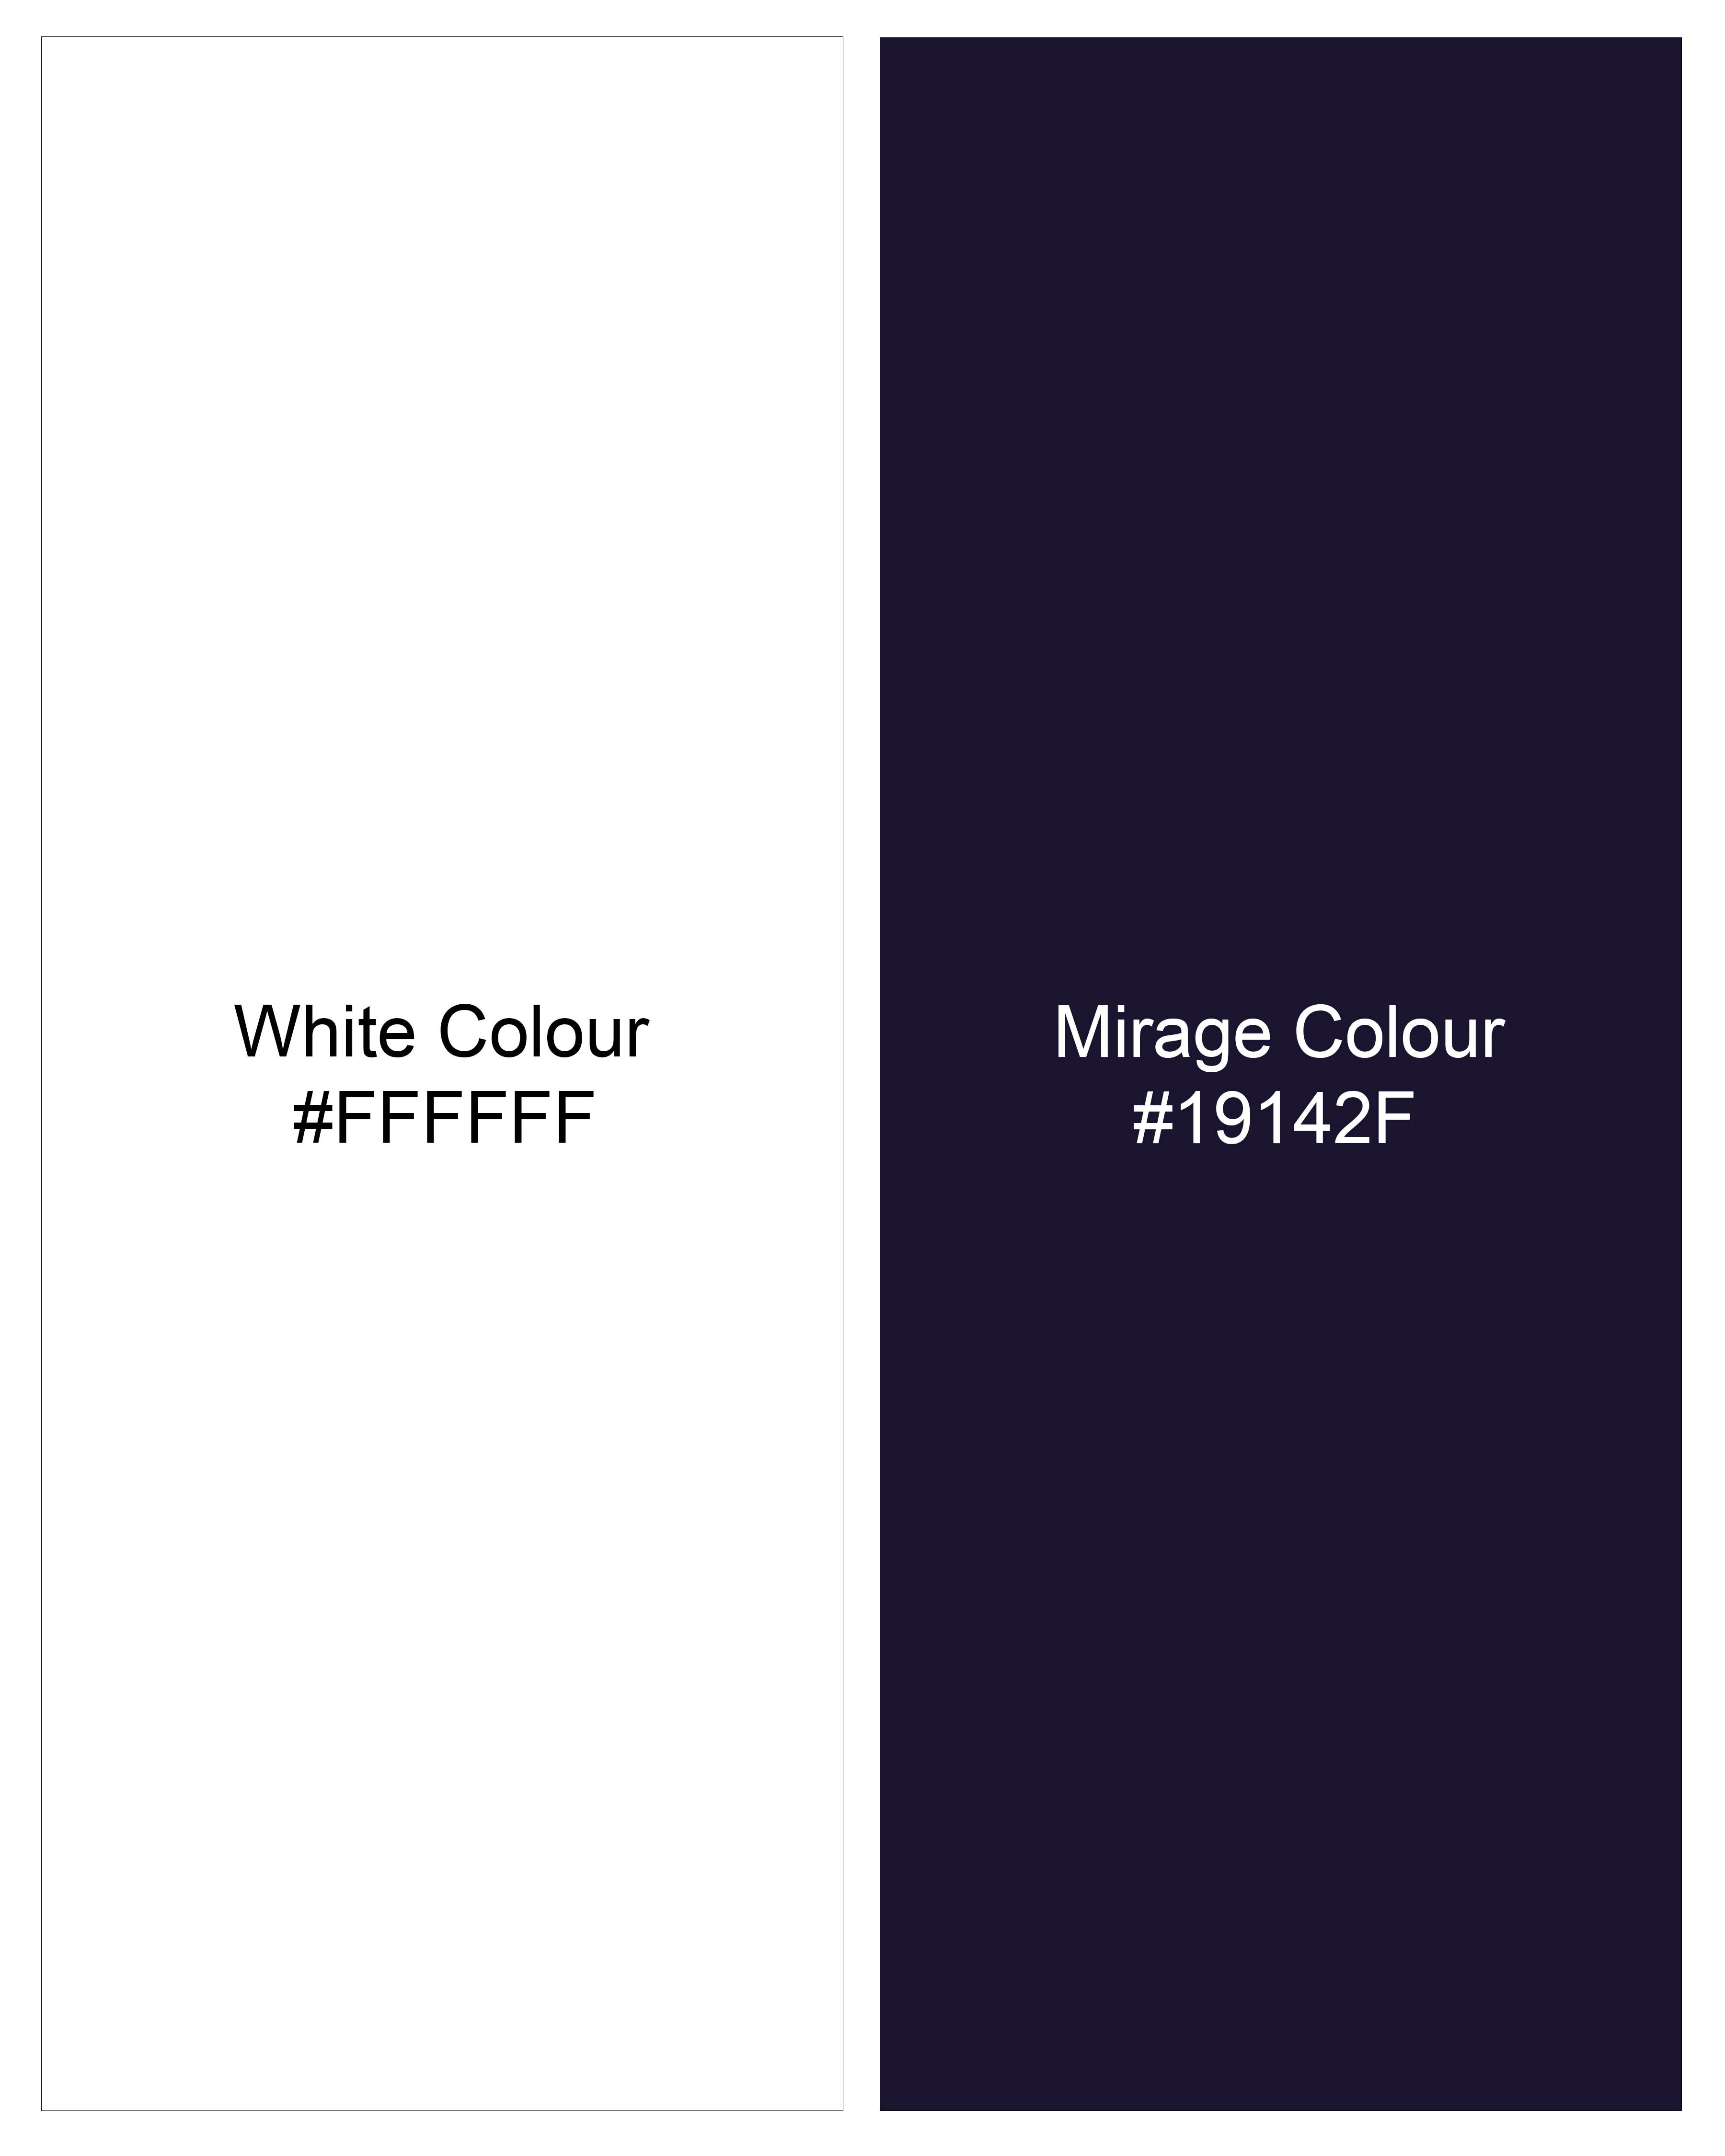 Mirage Navy Blue with White Textured Denim Shirt 9938-38, 9938-H-38, 9938-39, 9938-H-39, 9938-40, 9938-H-40, 9938-42, 9938-H-42, 9938-44, 9938-H-44, 9938-46, 9938-H-46, 9938-48, 9938-H-48, 9938-50, 9938-H-50, 9938-52, 9938-H-52